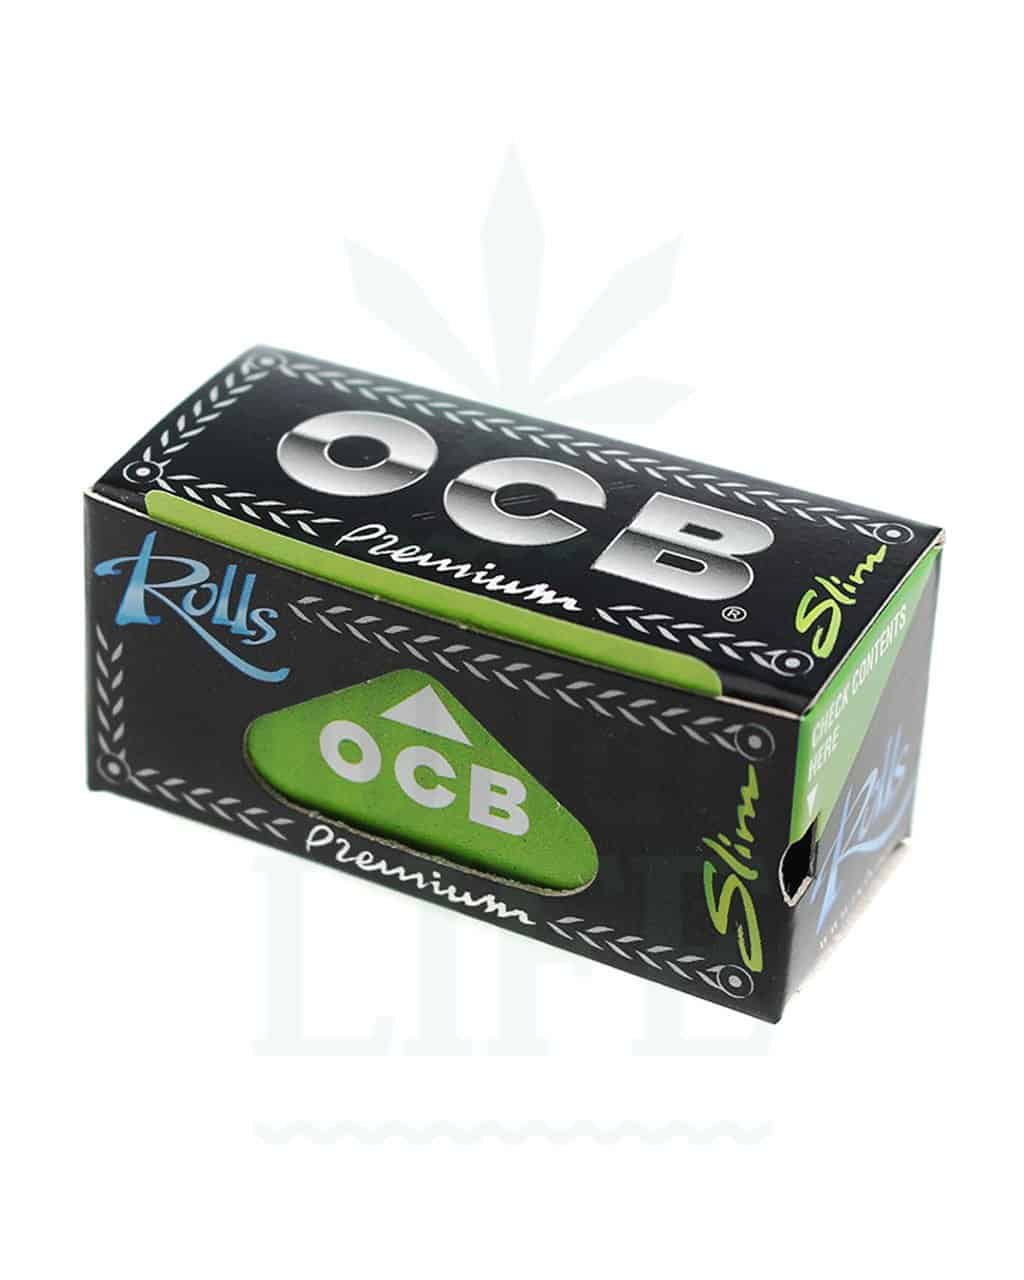 OCB Slim Roll kit